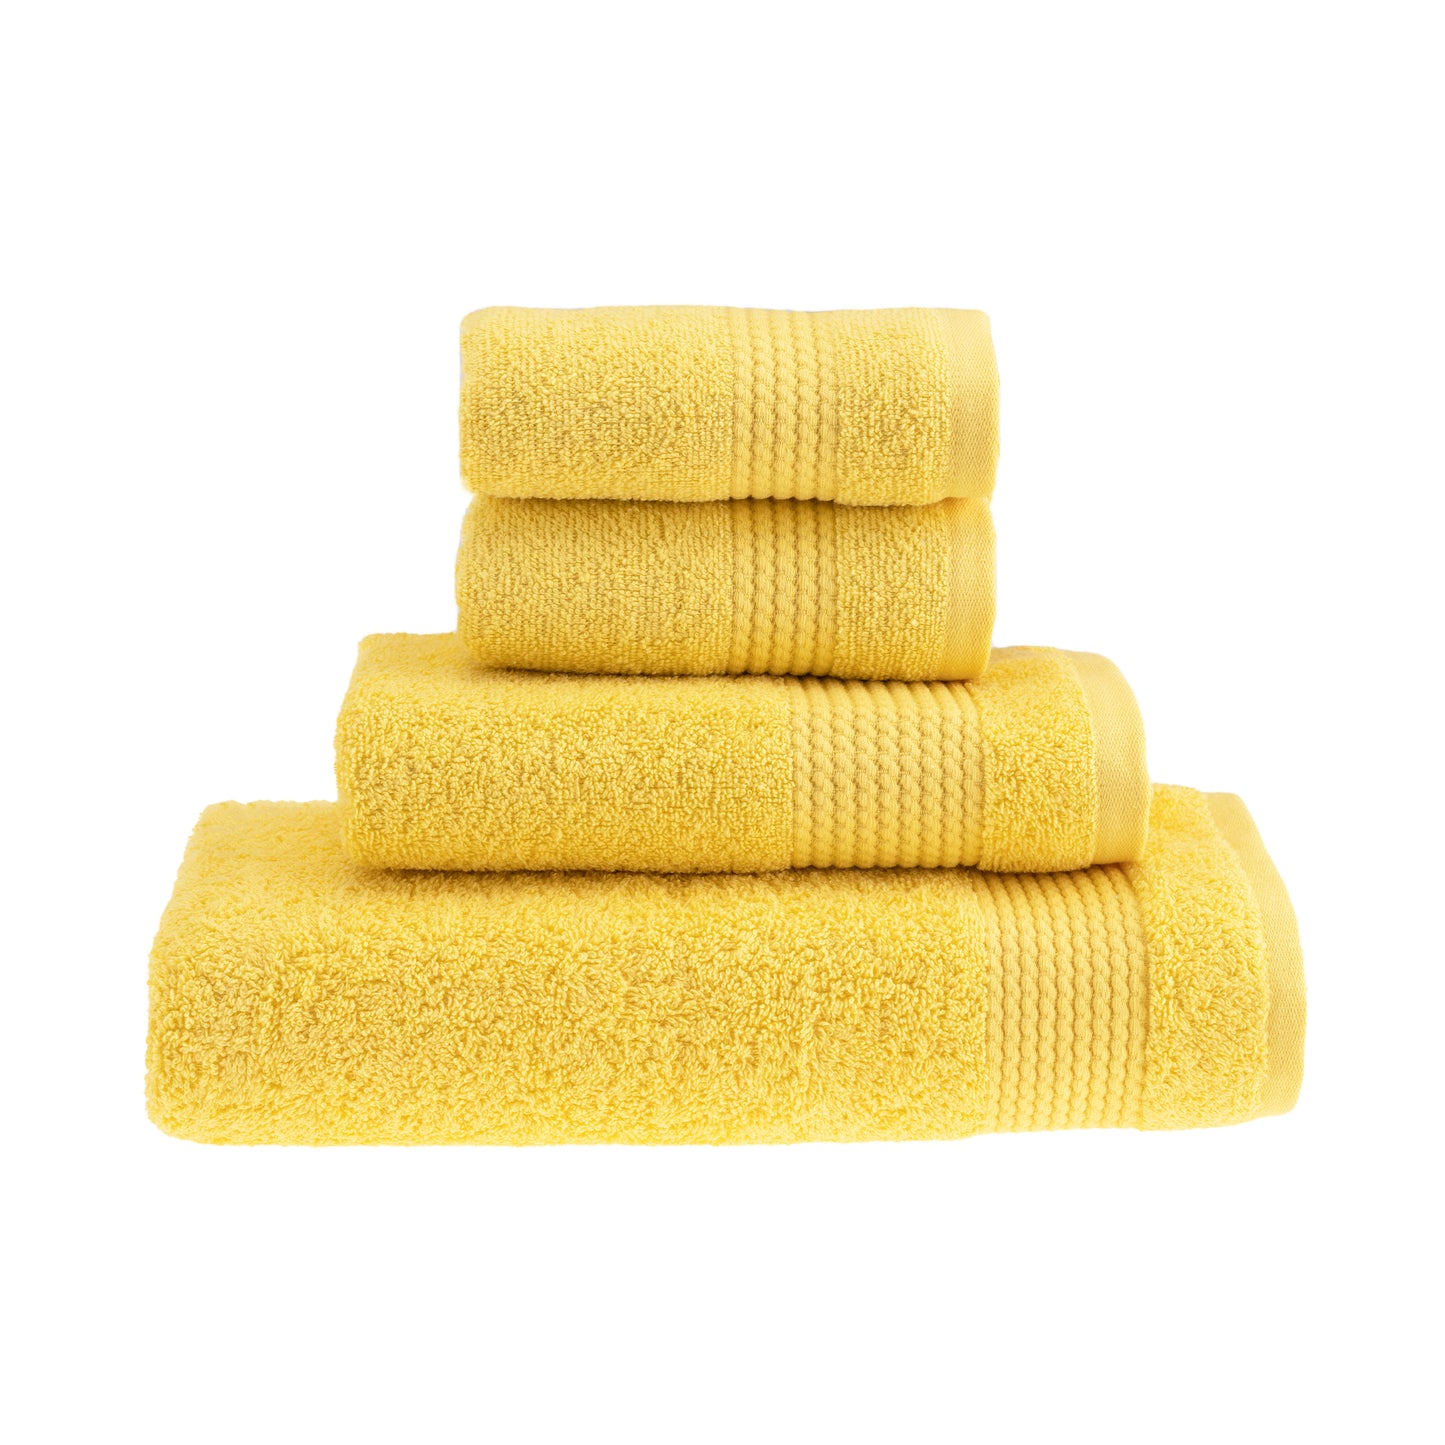 HALLEY Turkish Bath Towels Set – 4 Piece Bathroom Set, Ultra Soft, Machine Washable, Highly Absorbent, 100% Cotton - 650 GSM Luxury Spa Quality, 1 Bath Towels, 1 Hand Towels, 2 Washcloths - Yellow